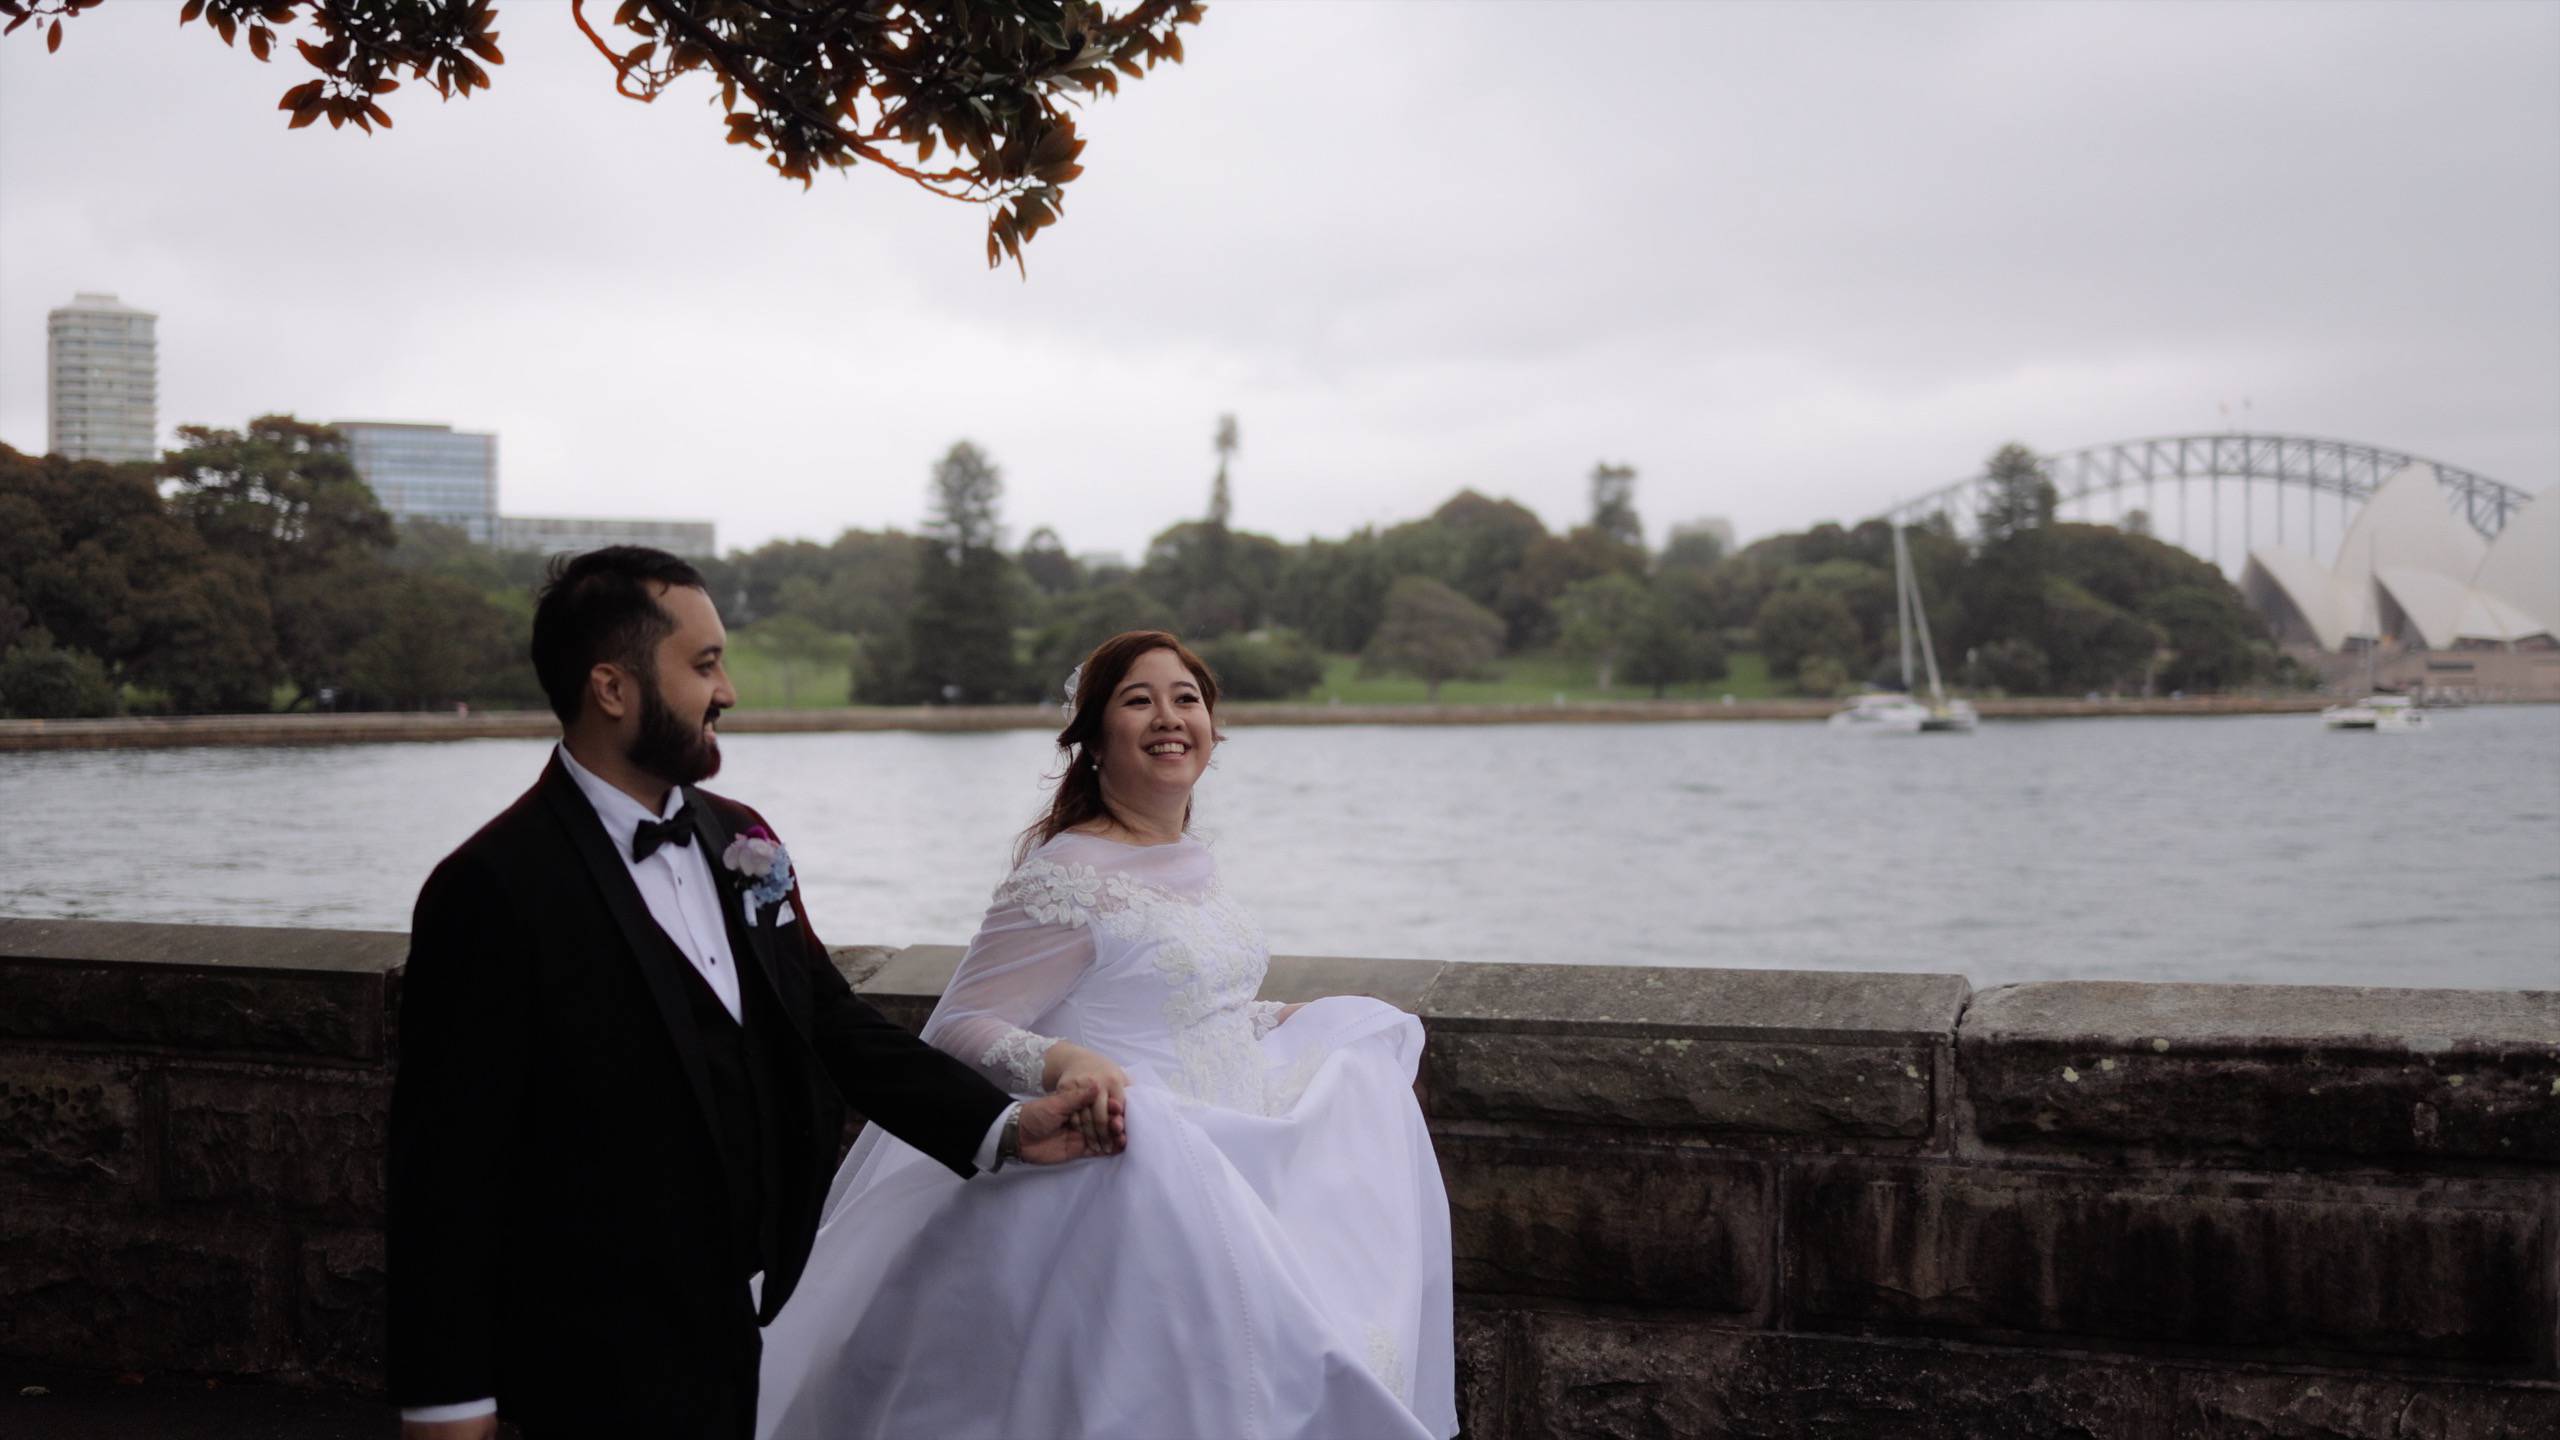 Satia + John Highlight Film // Ovolo Woolloomooloo // Sydney Wedding Videography